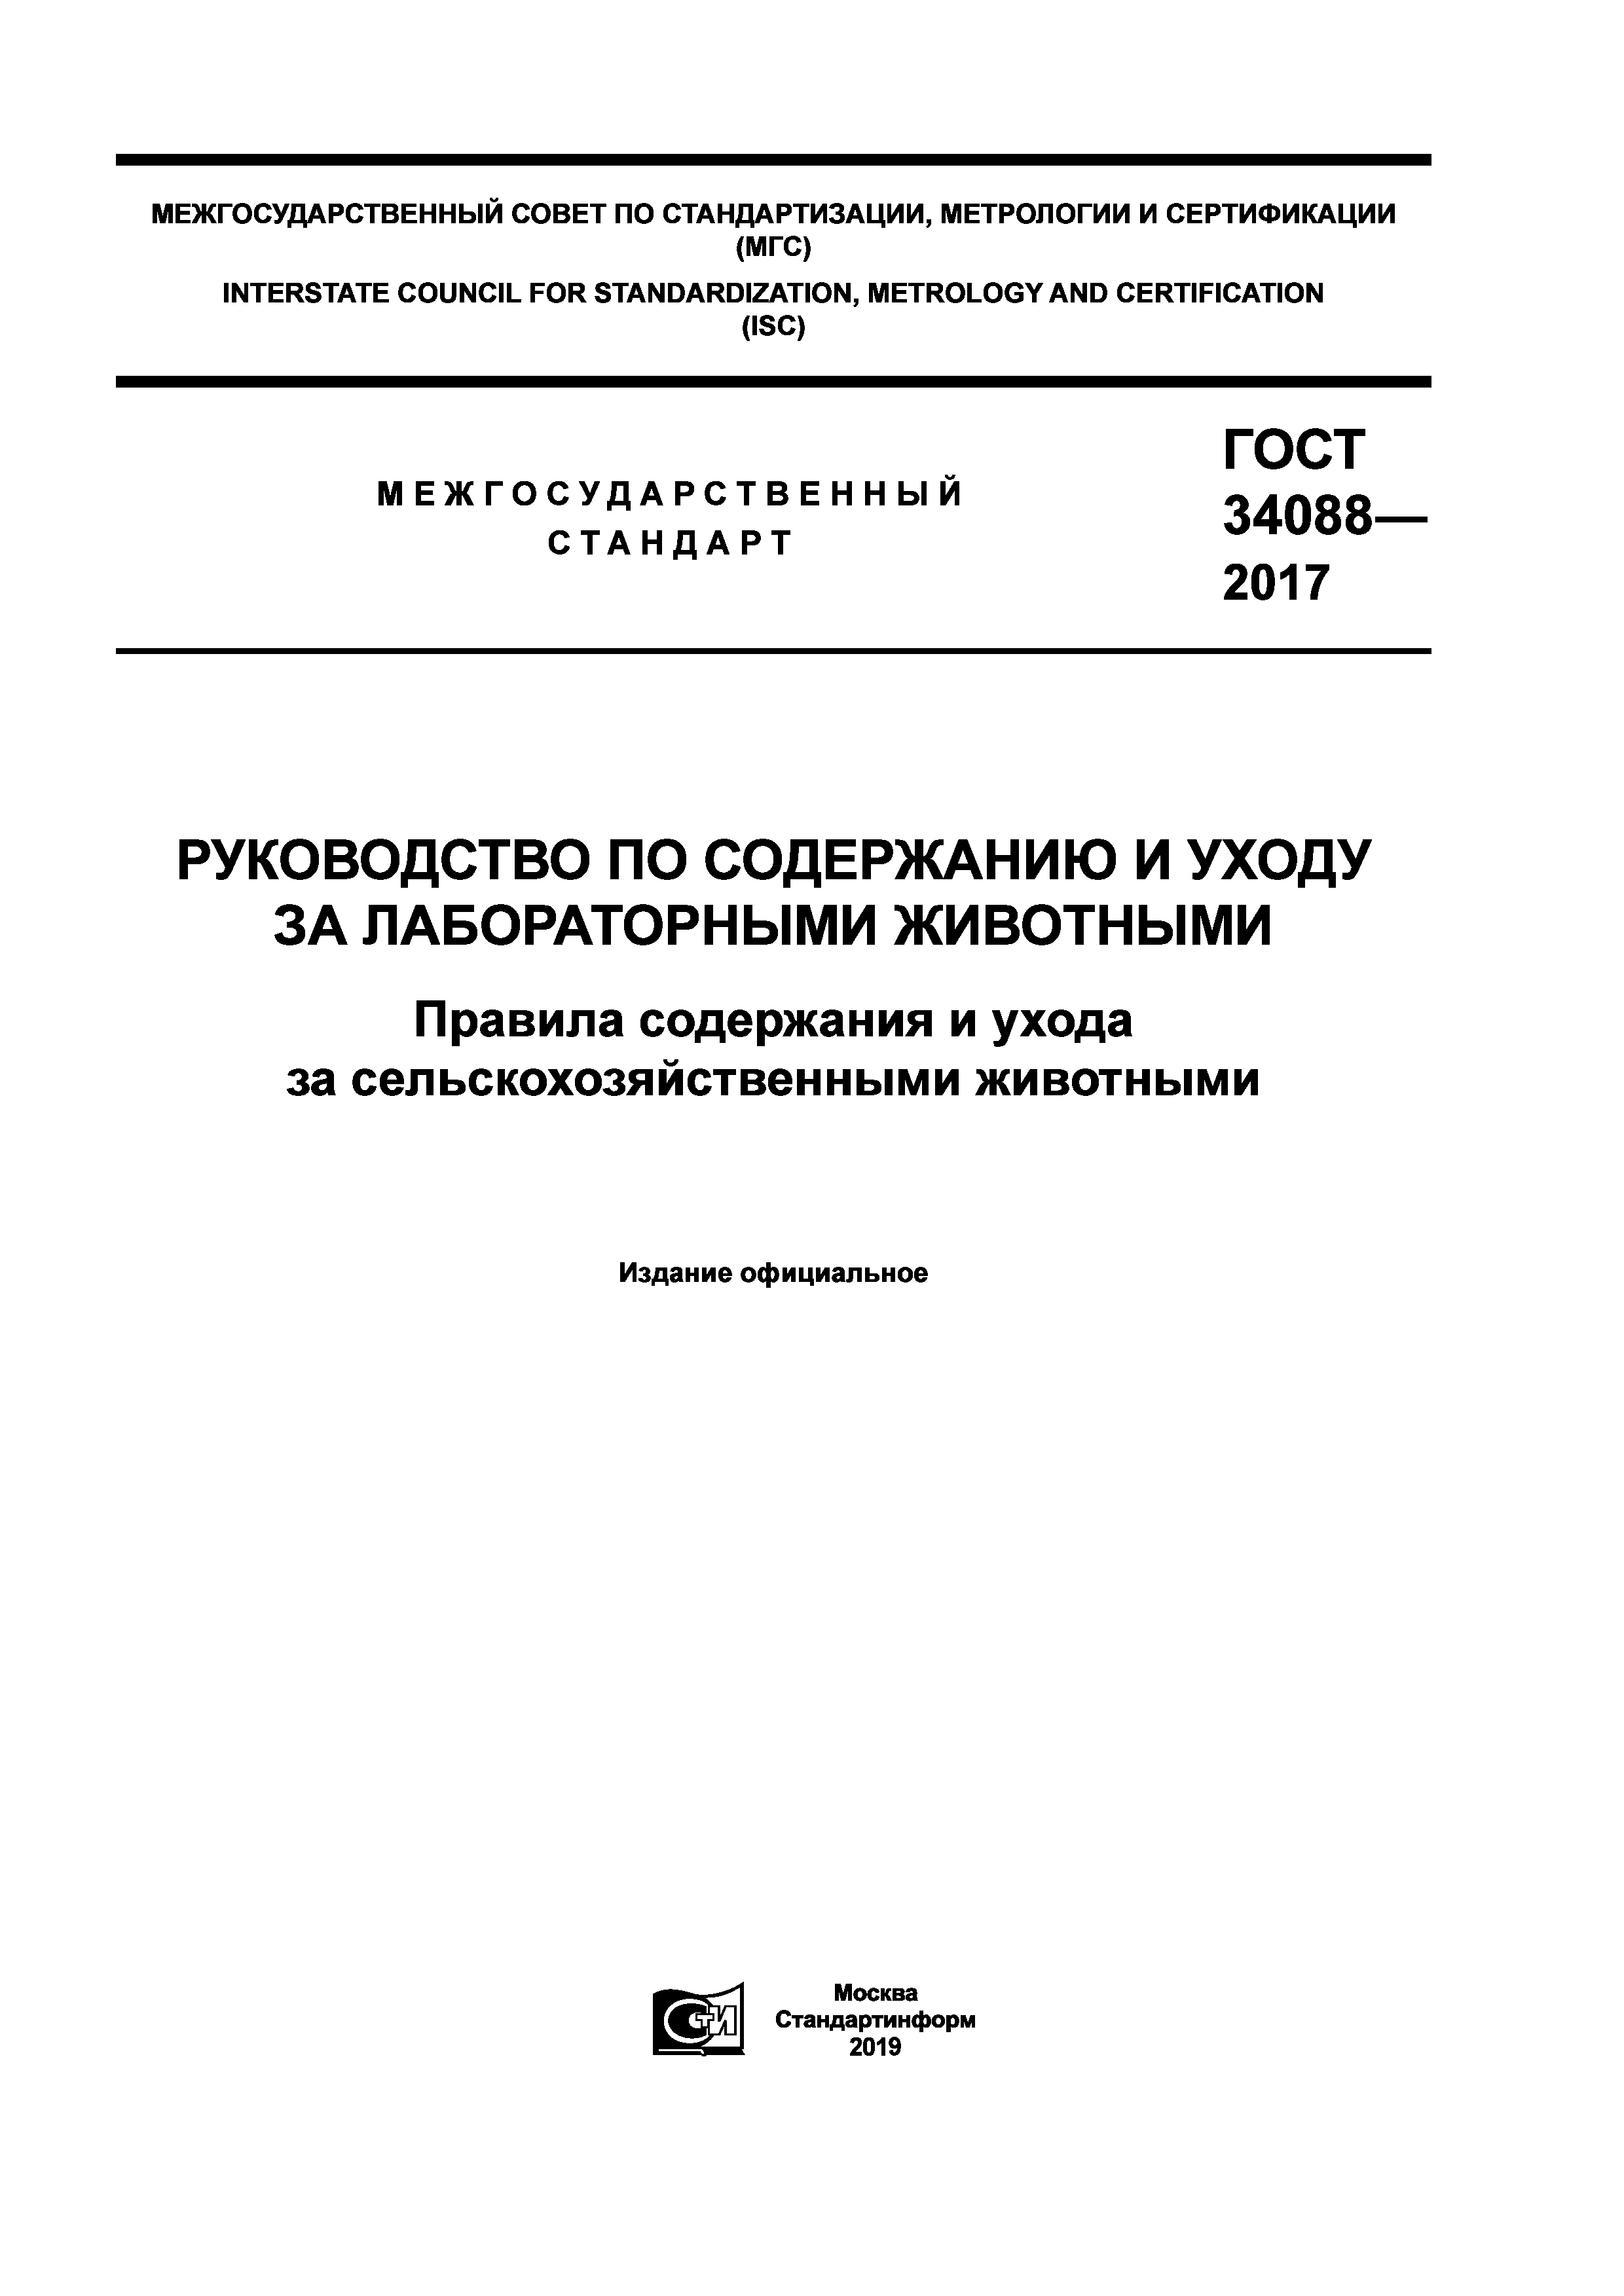 ГОСТ 34088-2017